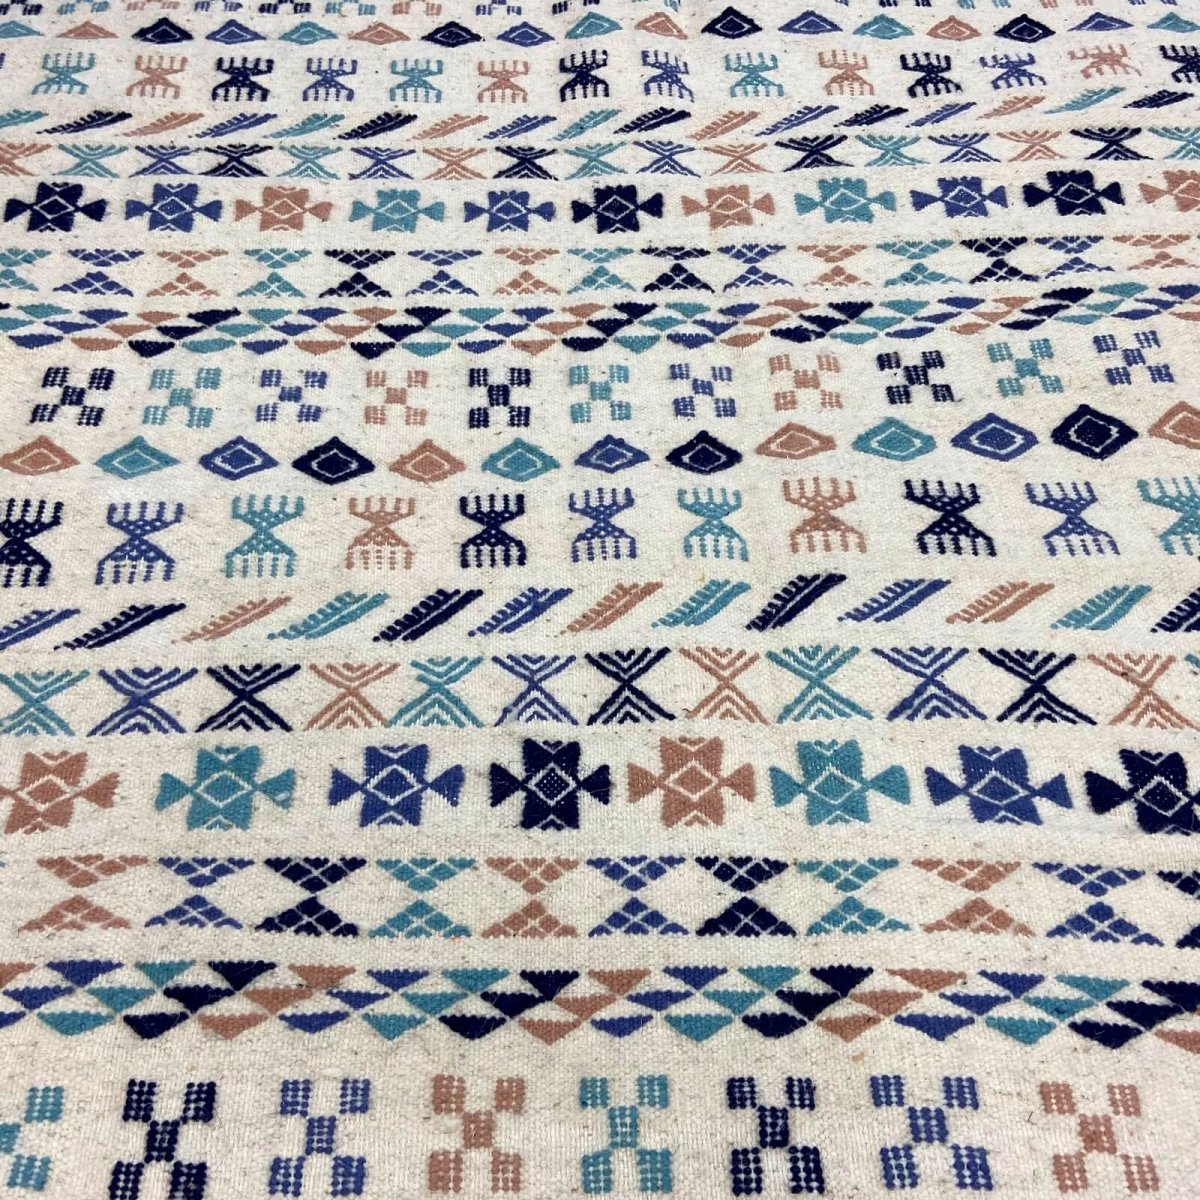 Berber tapijt Vloerkleed Kilim 135x205 cm Wit Blauw Bruin | Handgeweven, Wol, Tunesië Tunesisch kilimdeken, Marokkaanse stijl. R